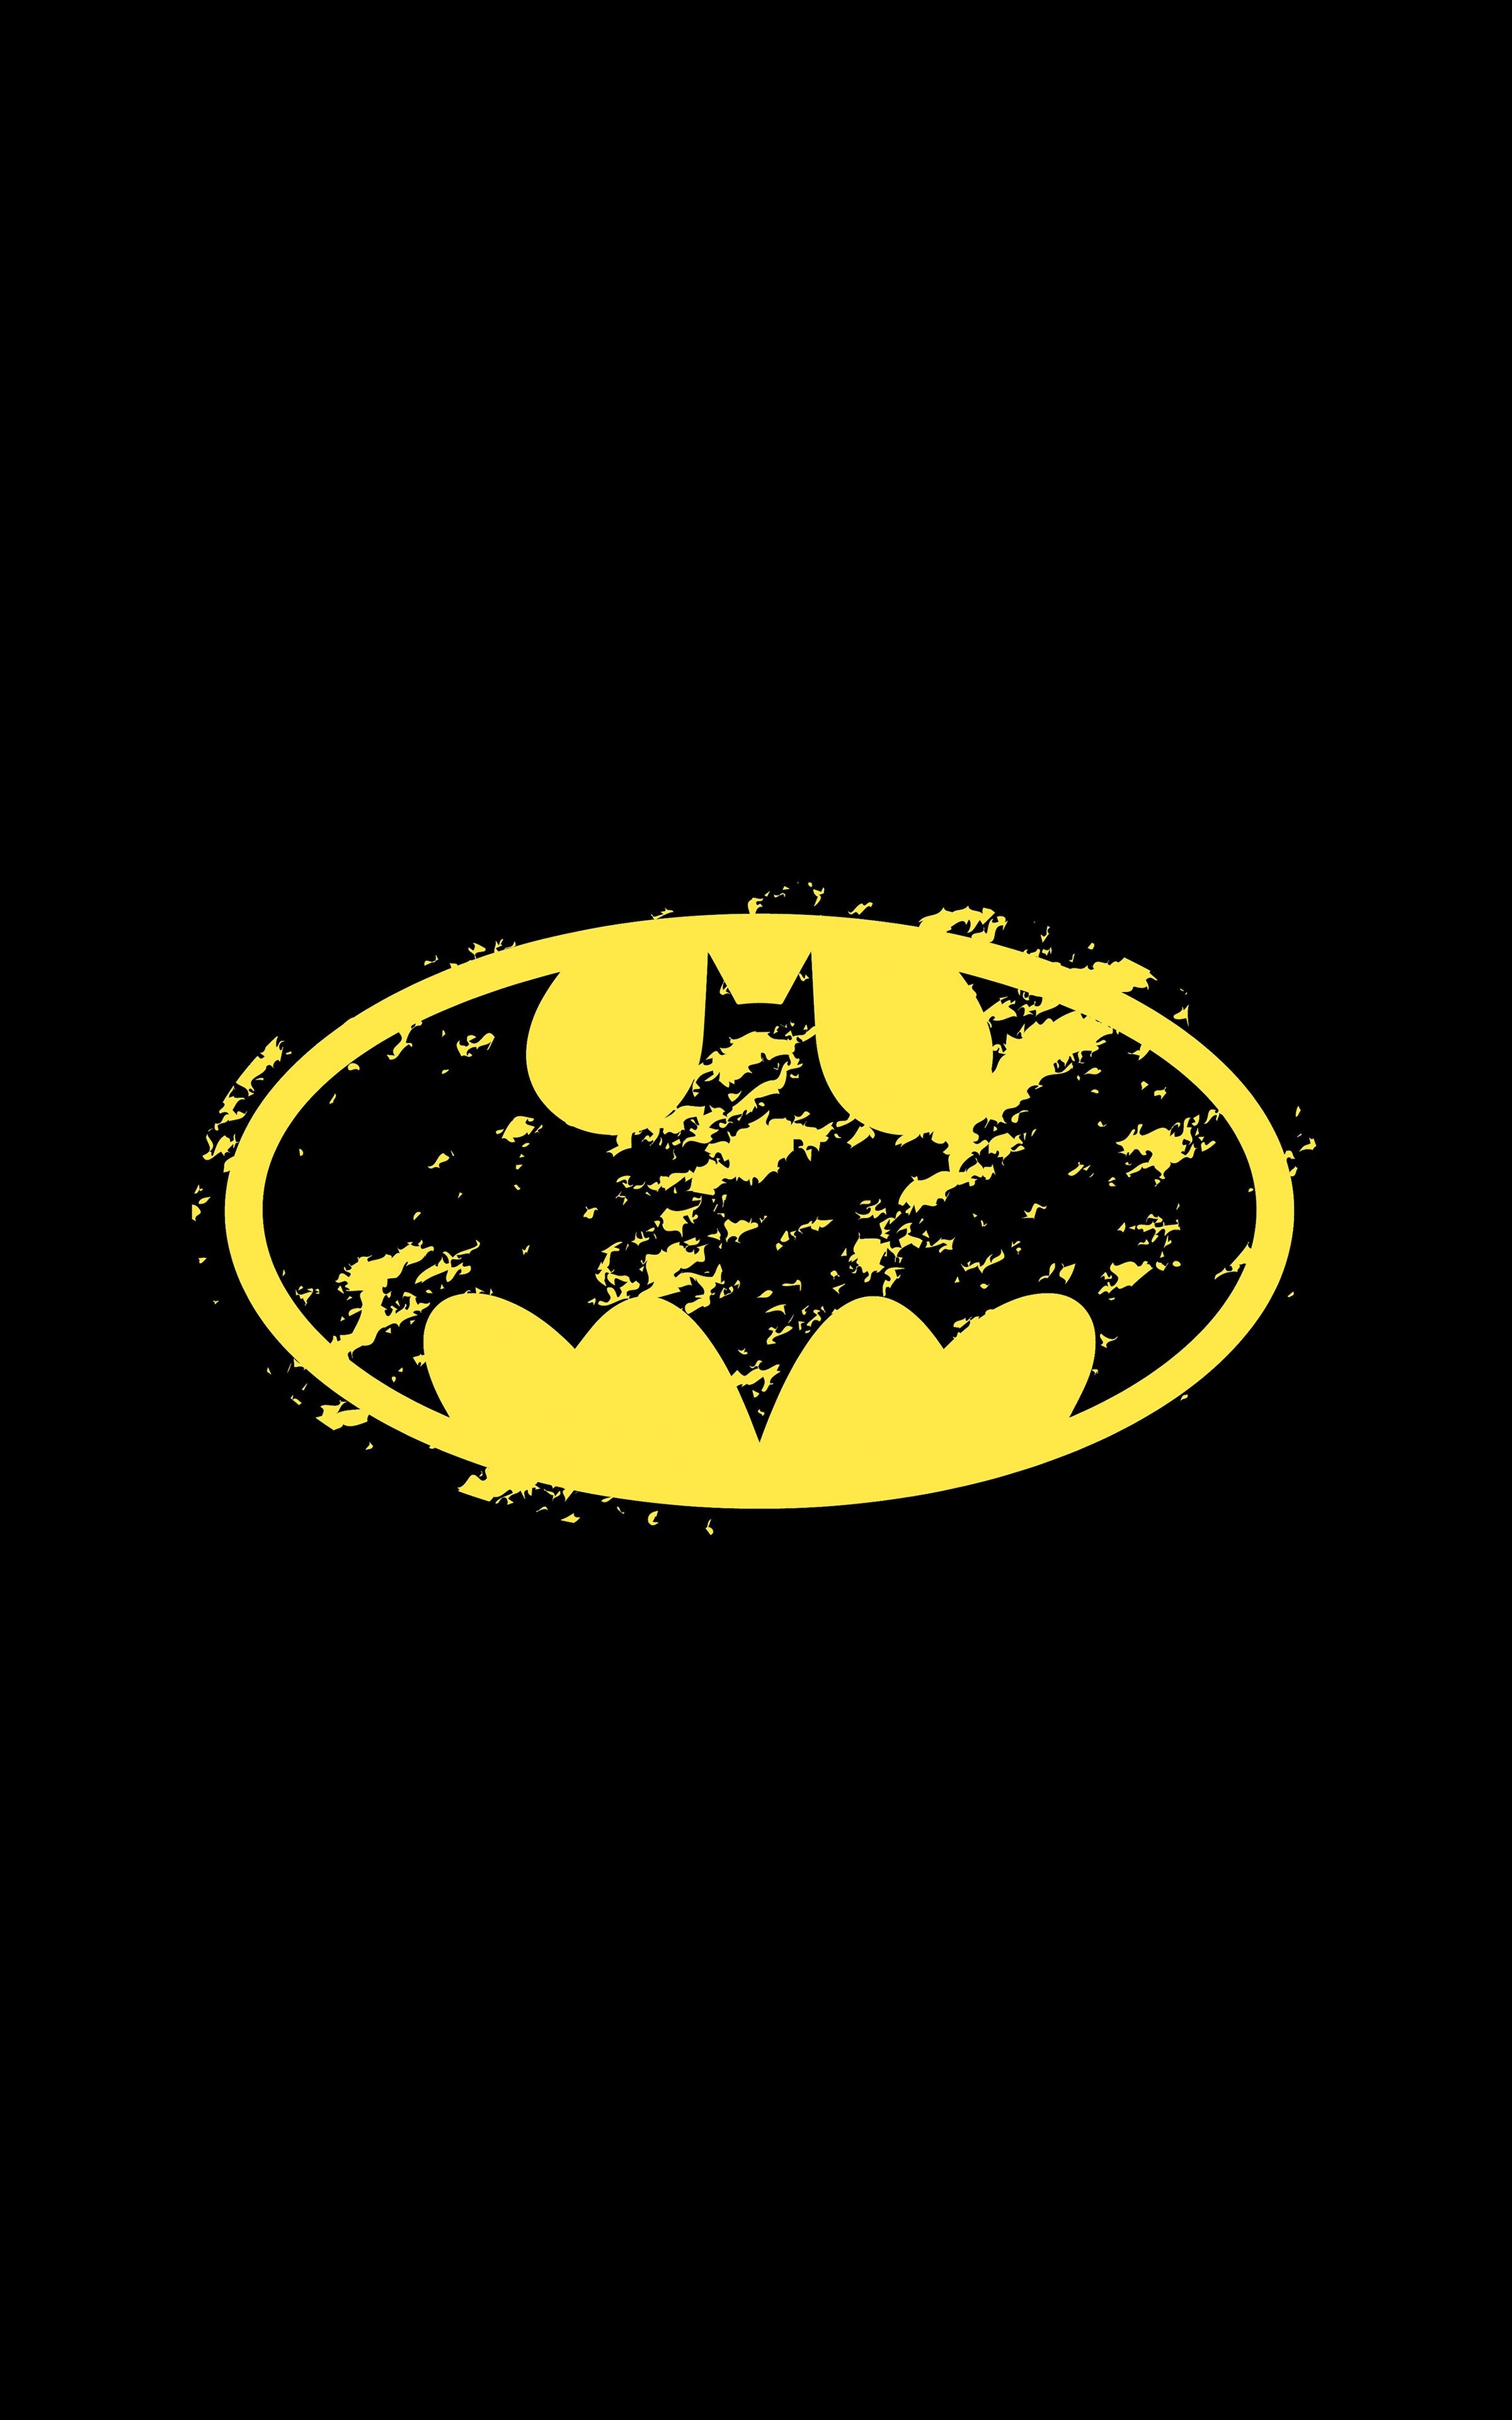 Бесплатное фото Значок логотип бэтмена